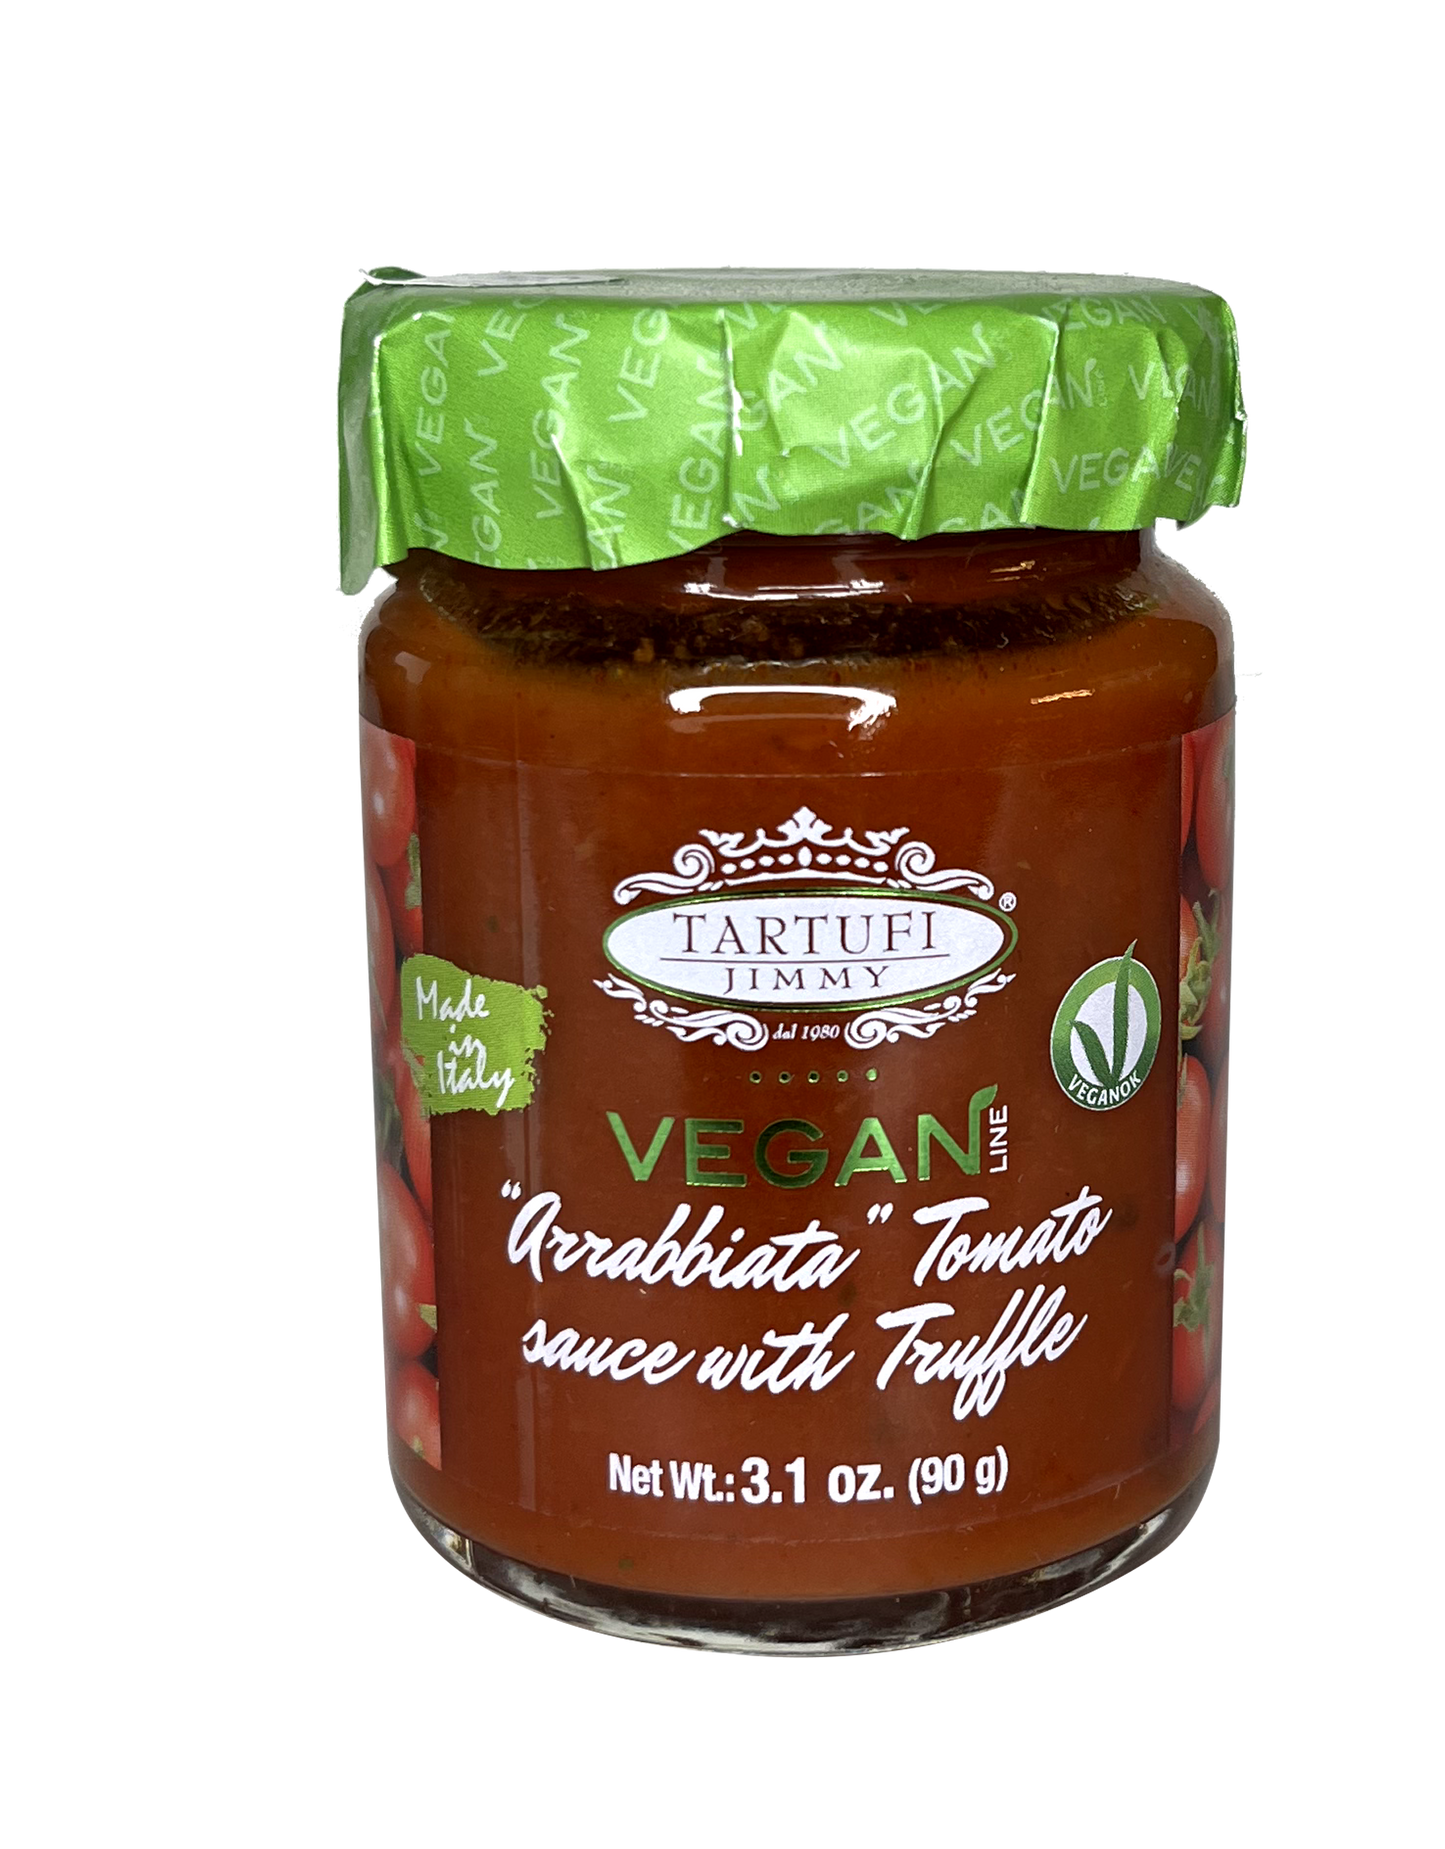 Vegan Arrabbiata tomato sauce with truffle Tartufi Jimmy